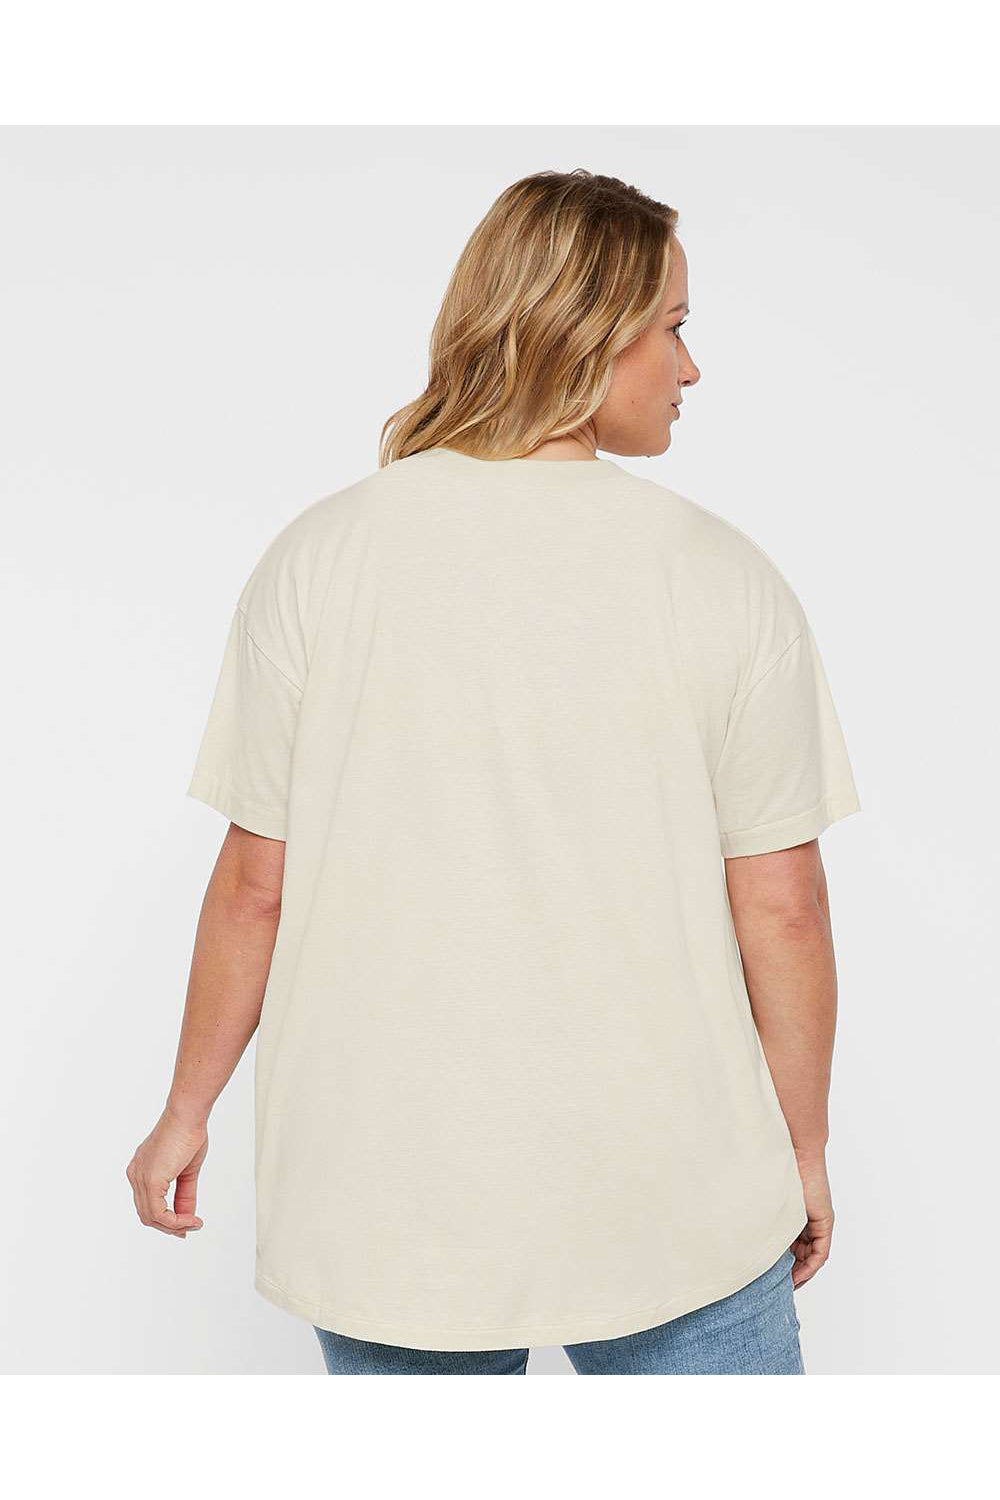 LAT 3519 Womens Hi-Lo Short Sleeve Crewneck T-Shirt Natural Model Back